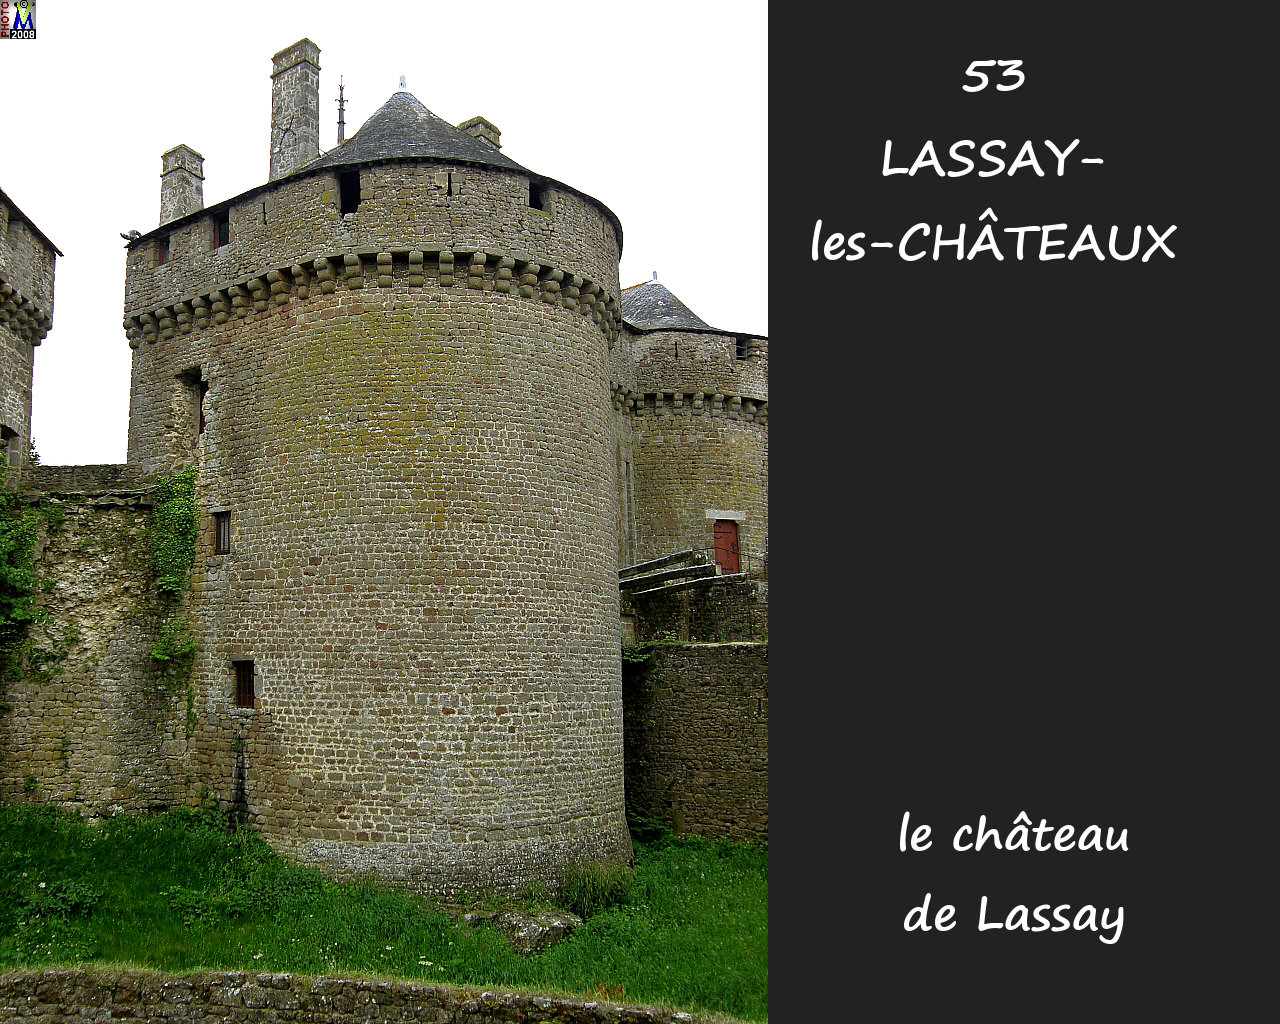 53LASSAY-CHATEAUX_chateauL_120.jpg